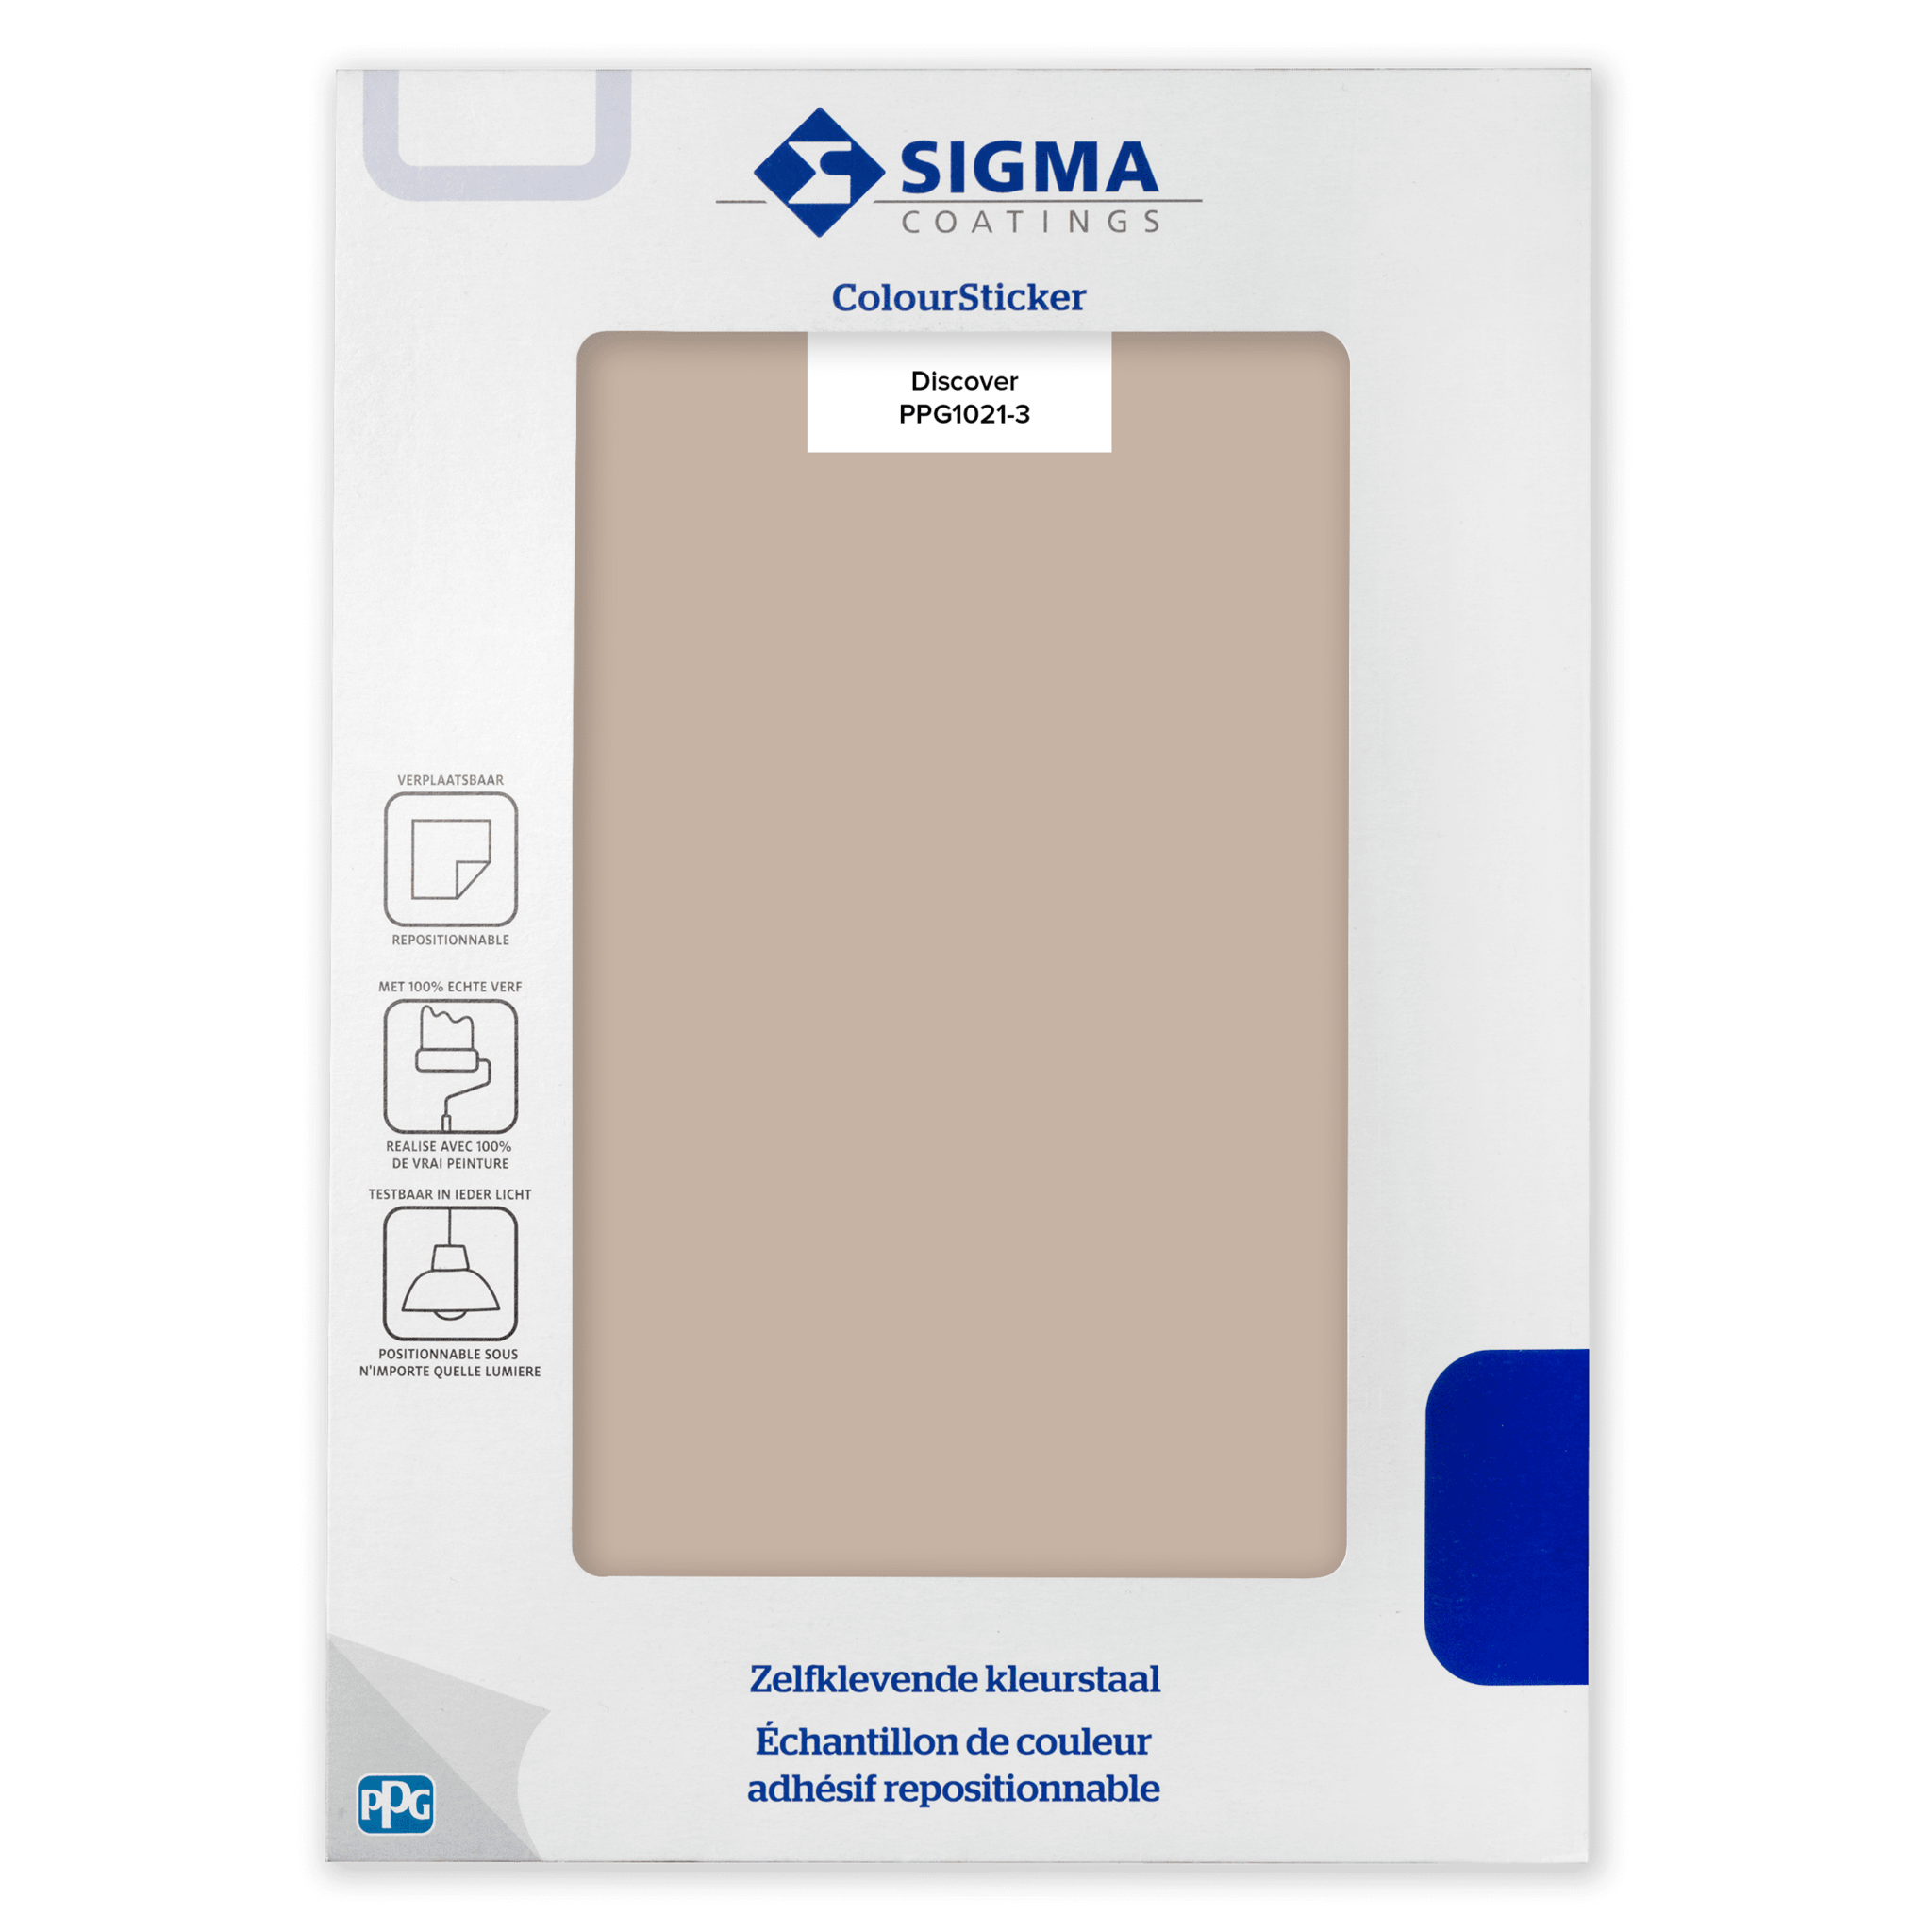 Sigma ColourSticker - Discover 1021-3